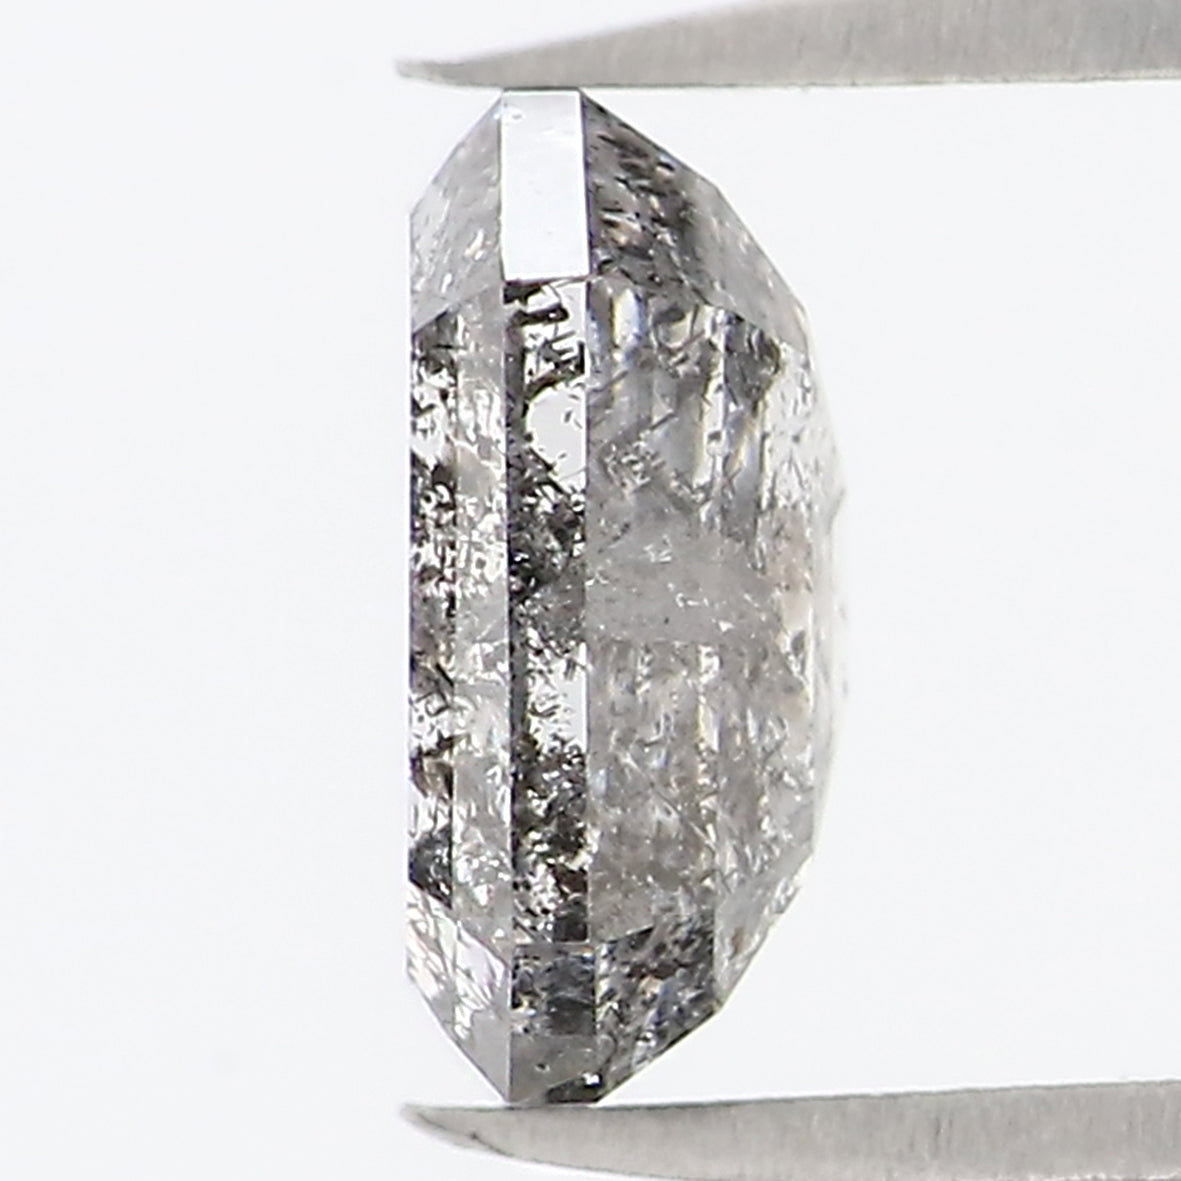 0.75 CT Natural Loose Emerald Shape Diamond Salt And Pepper Emerald Shape Diamond 5.95 MM Black Grey Color Emerald Rose Cut Diamond QL1100